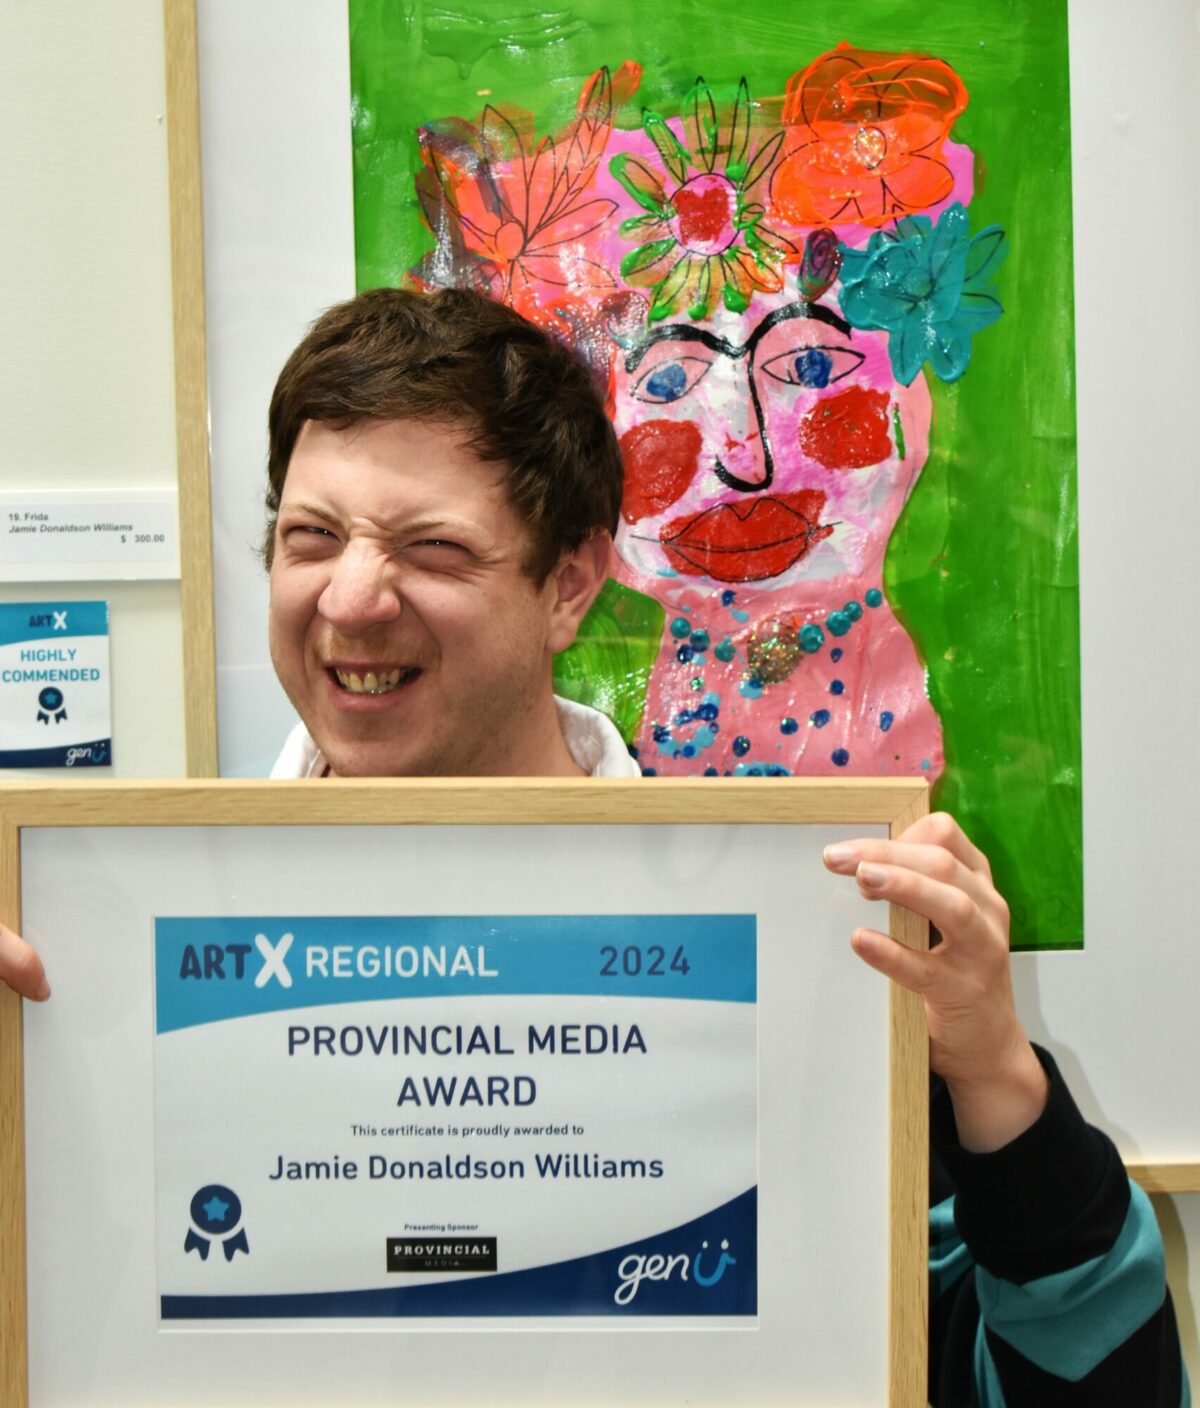 artX Regional 2024 Provincial Media Award winner Jamie Donaldson Williams and painting Frida